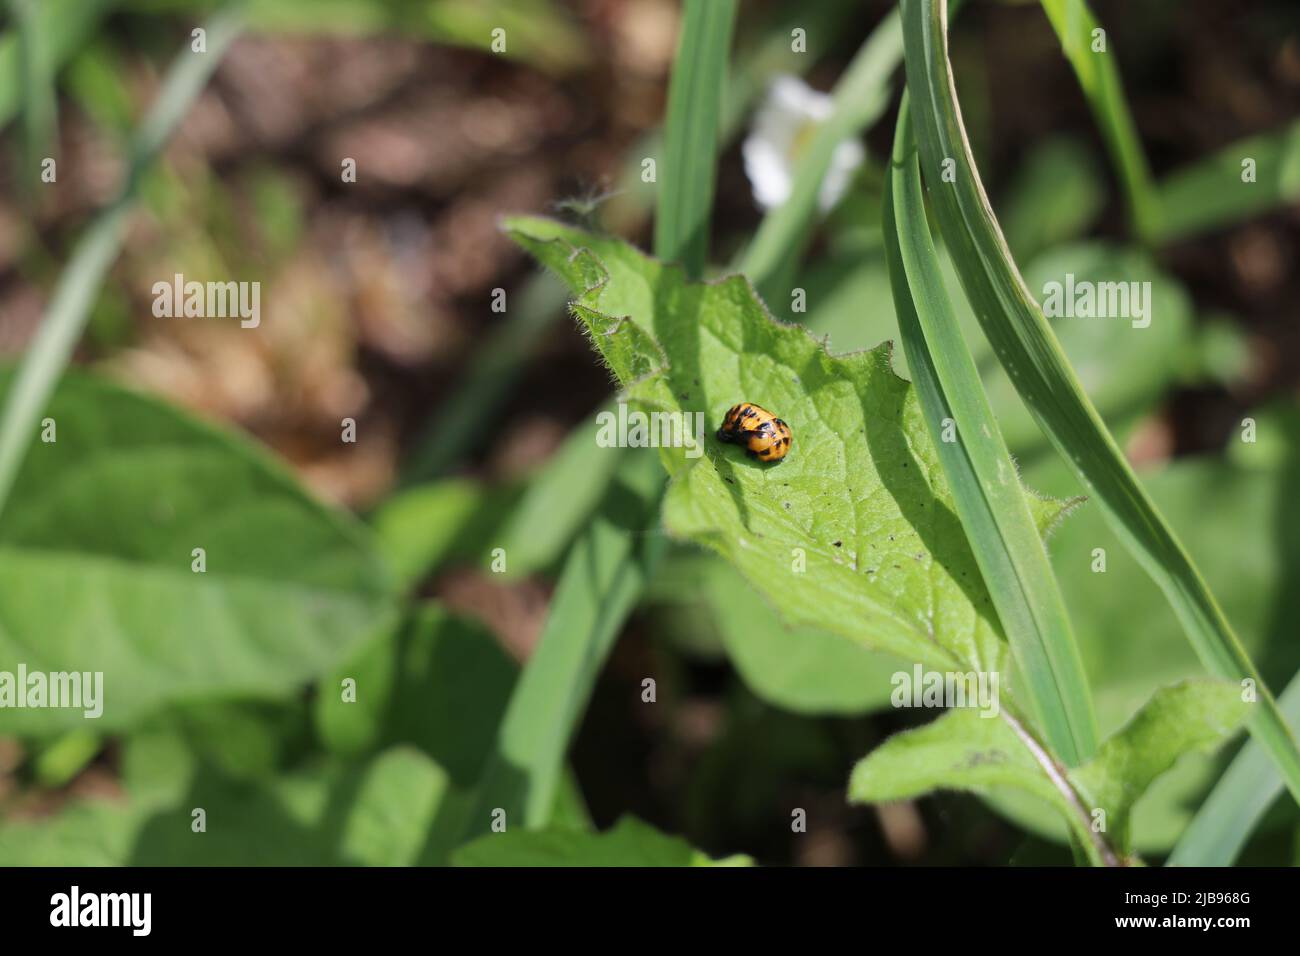 black and orange ladybug pupa on a green leaf Stock Photo